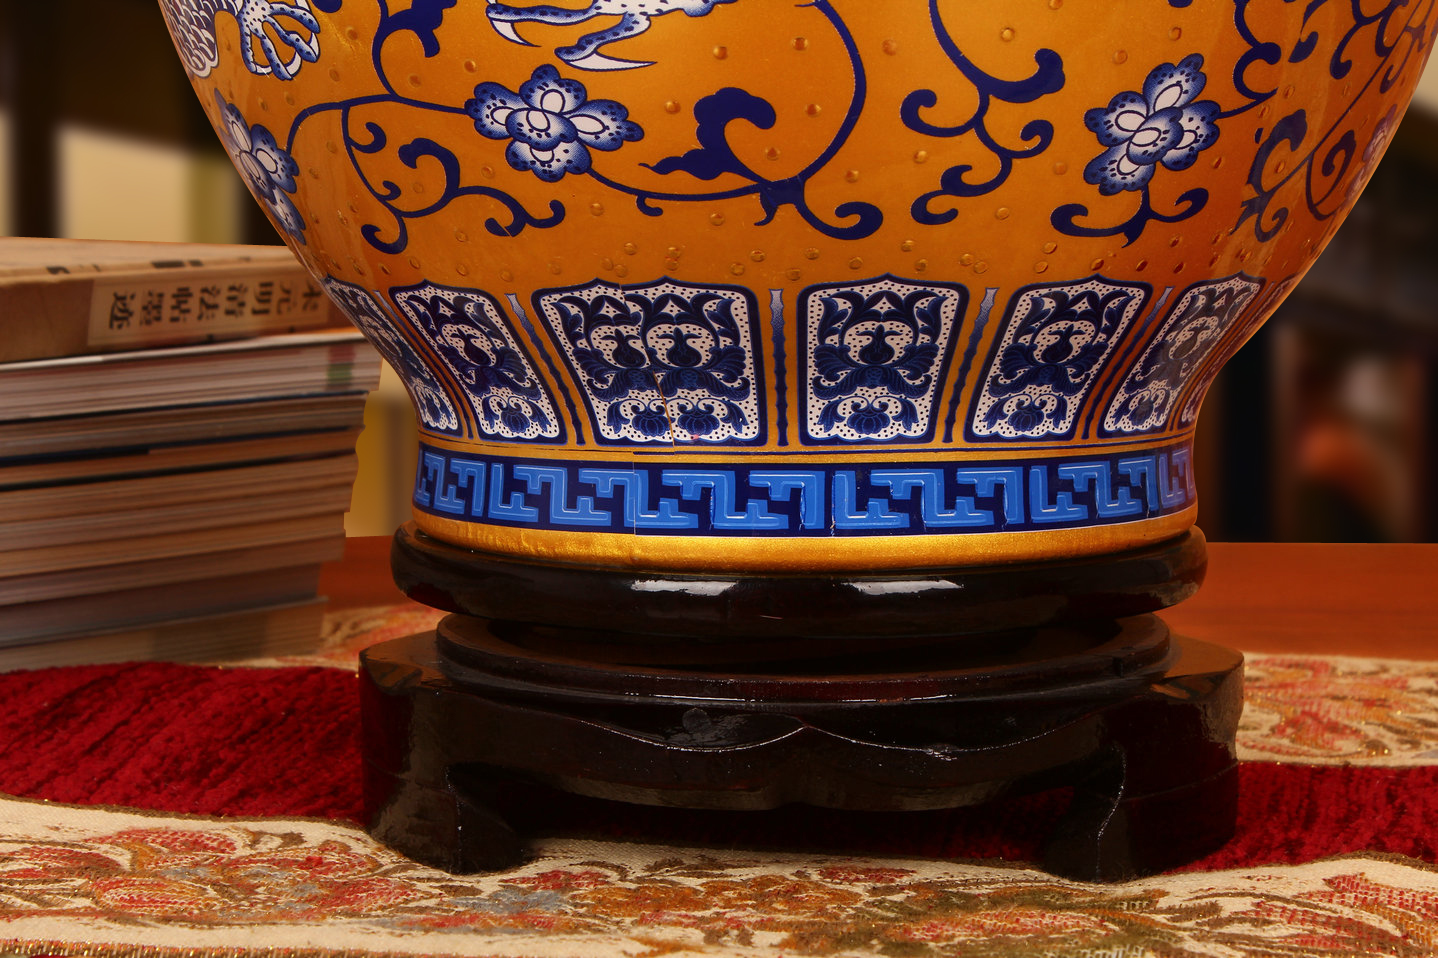 High - grade colored enamel porcelain of jingdezhen ceramics gold auspicious dragon vase modern Chinese style household furnishing articles